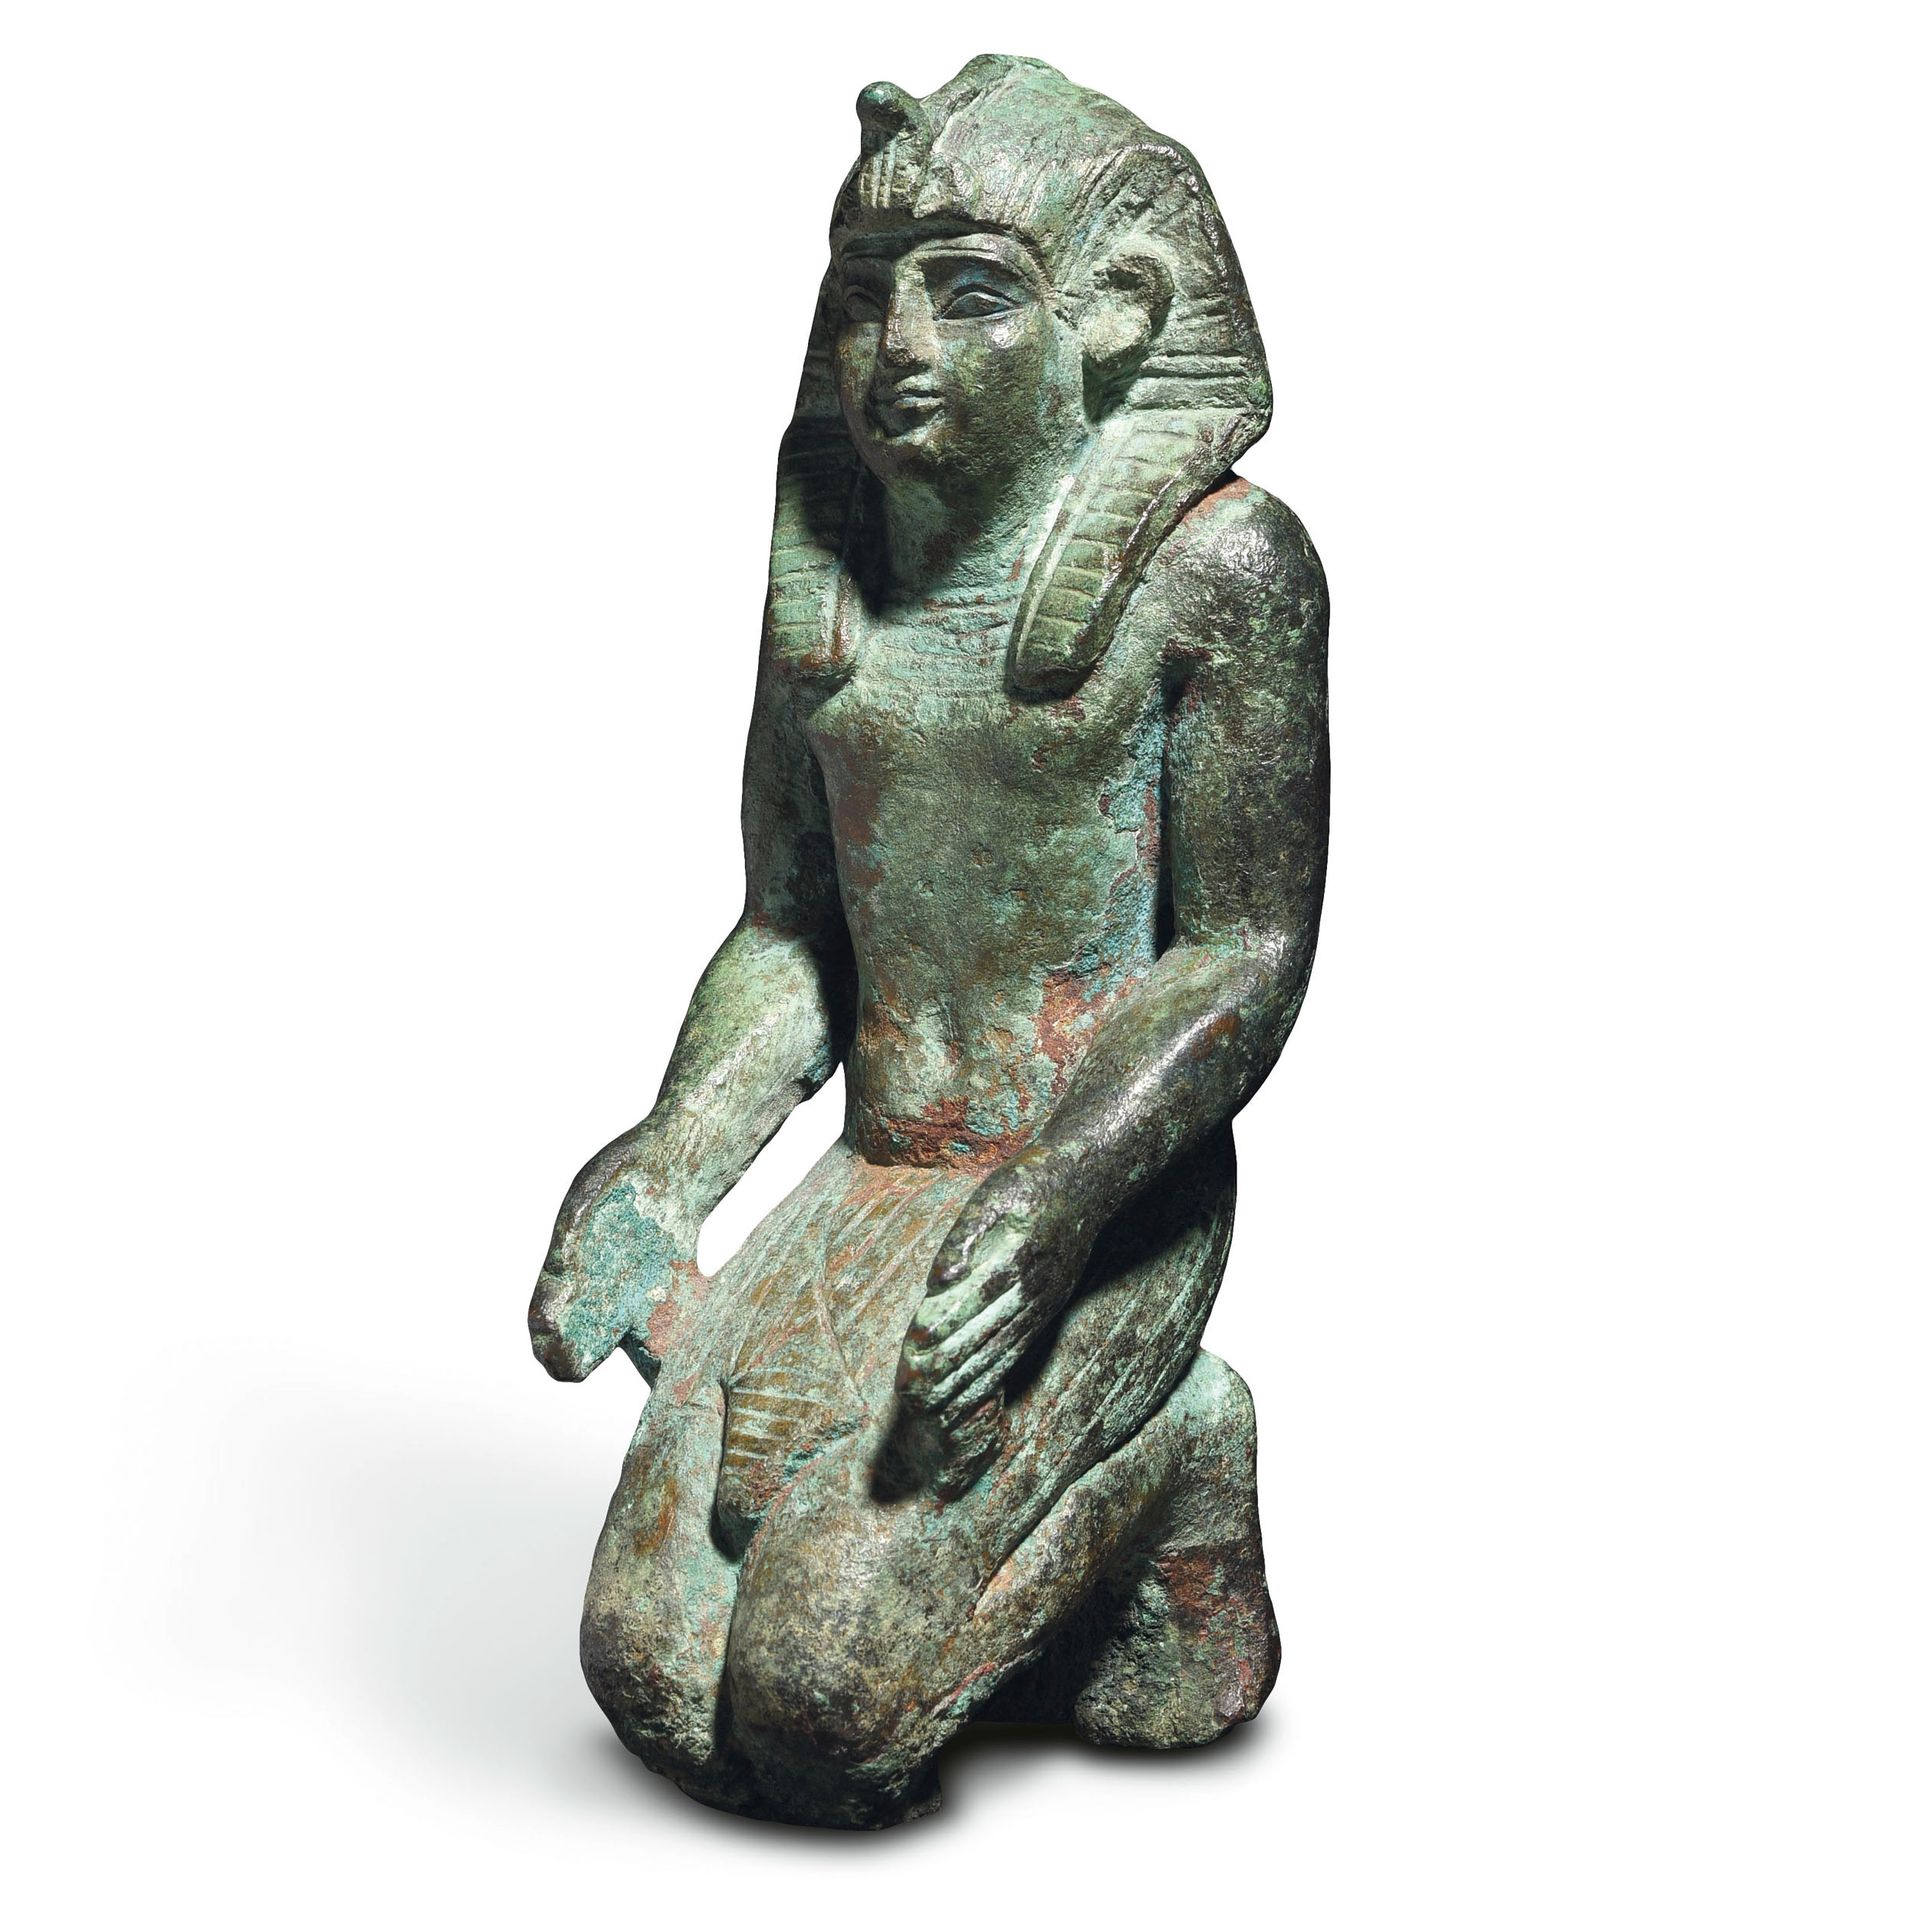 Null 跪着的法老雕像

埃及，晚期，公元前664-332年

铜质

H.12.4厘米



出处

前瑞士私人收藏，苏黎世，1930年左右收集。

然后通&hellip;